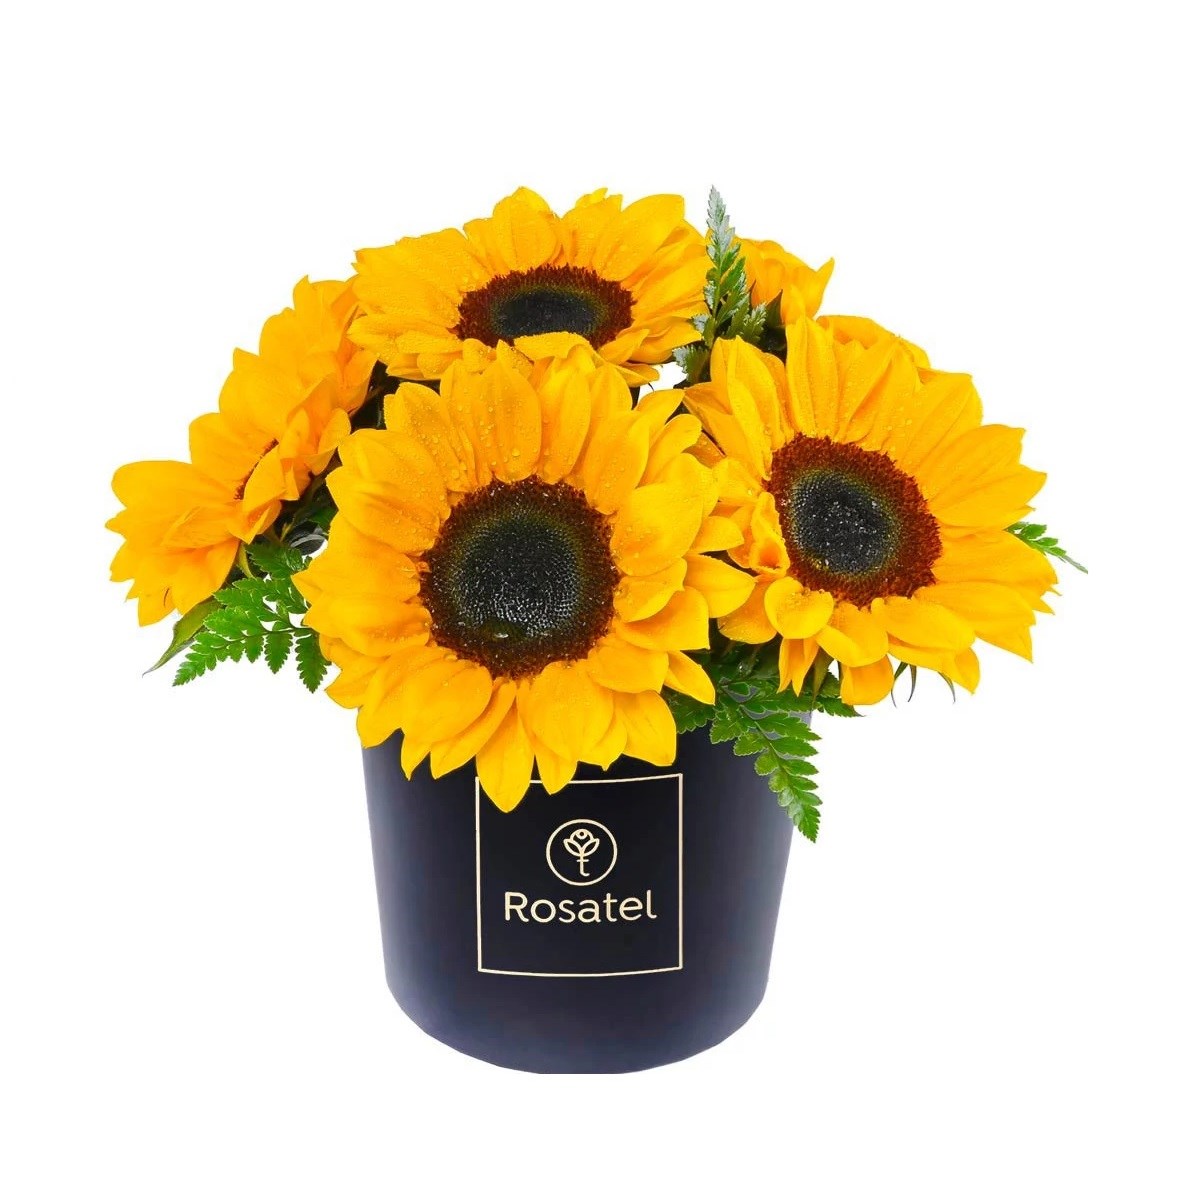 product image for Sunflower Rosatel Hatbox